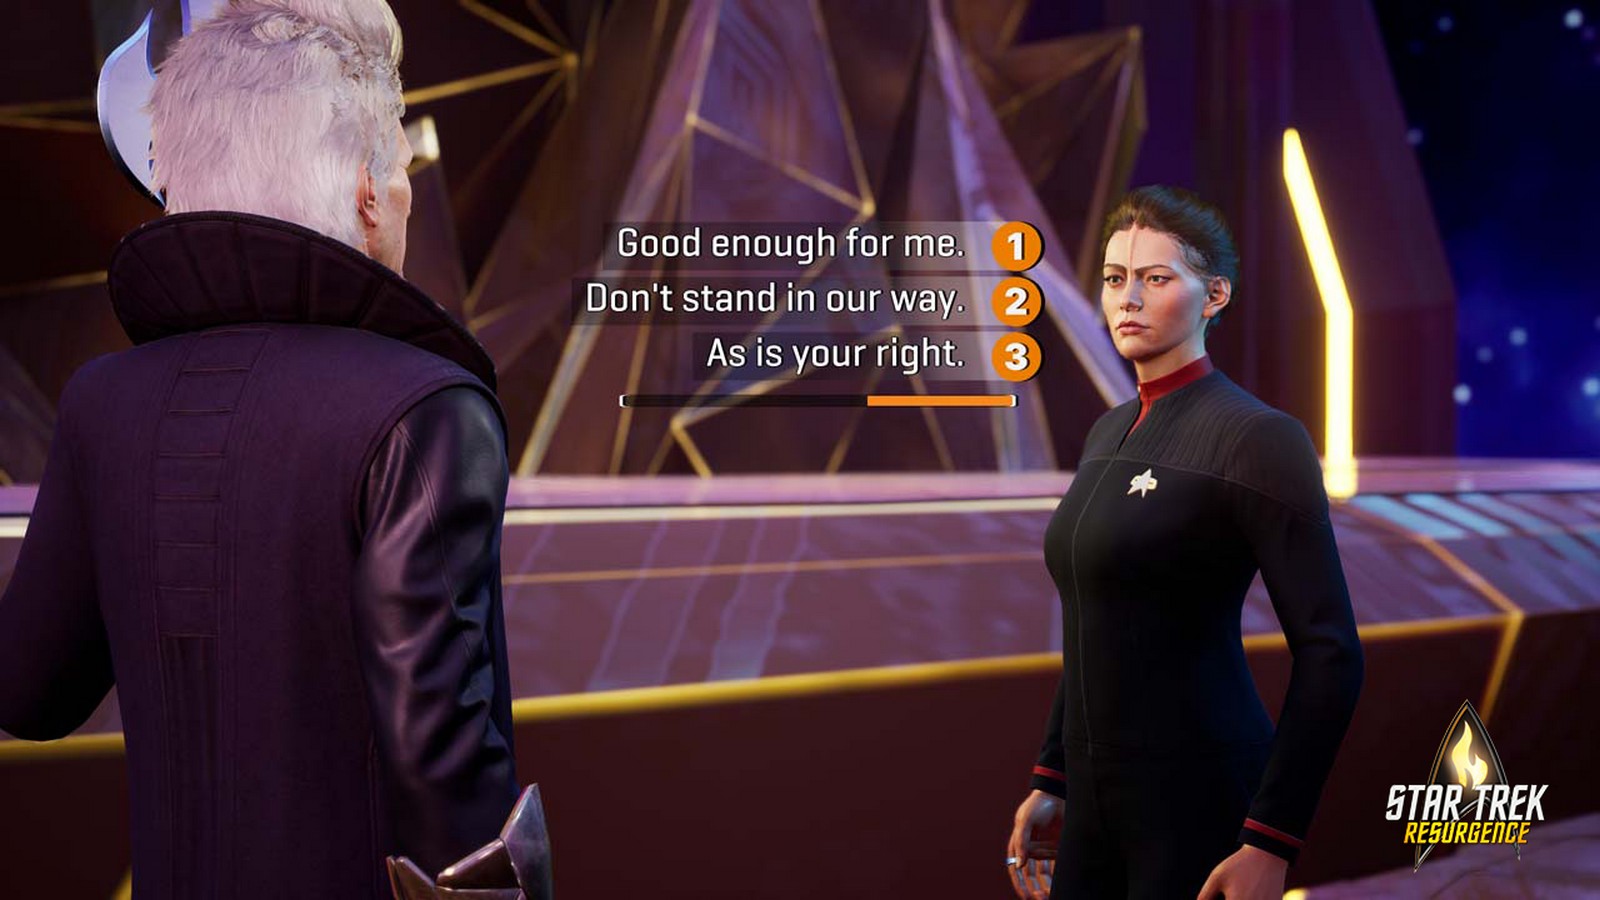 Star Trek: Resurgence - Wikipedia